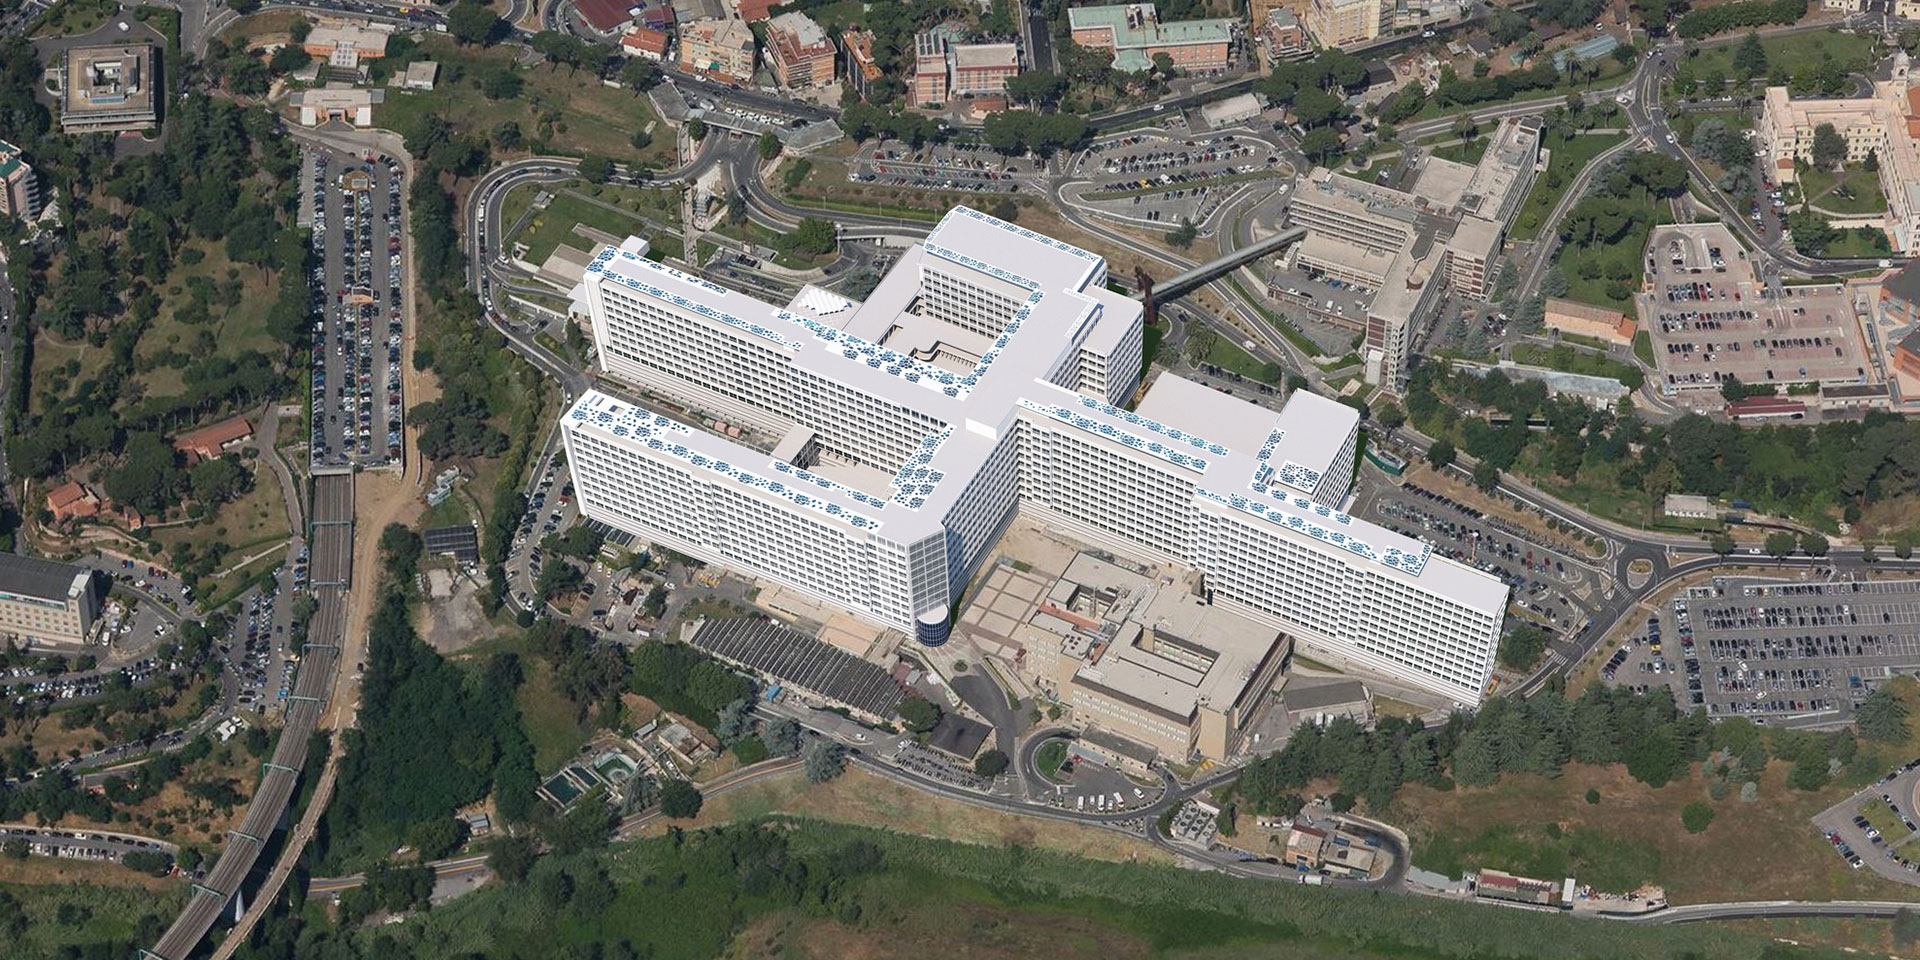 Green Hospital Policlinico Gemelli - Roma, Binini Partners, Società di architettura e ingegneria